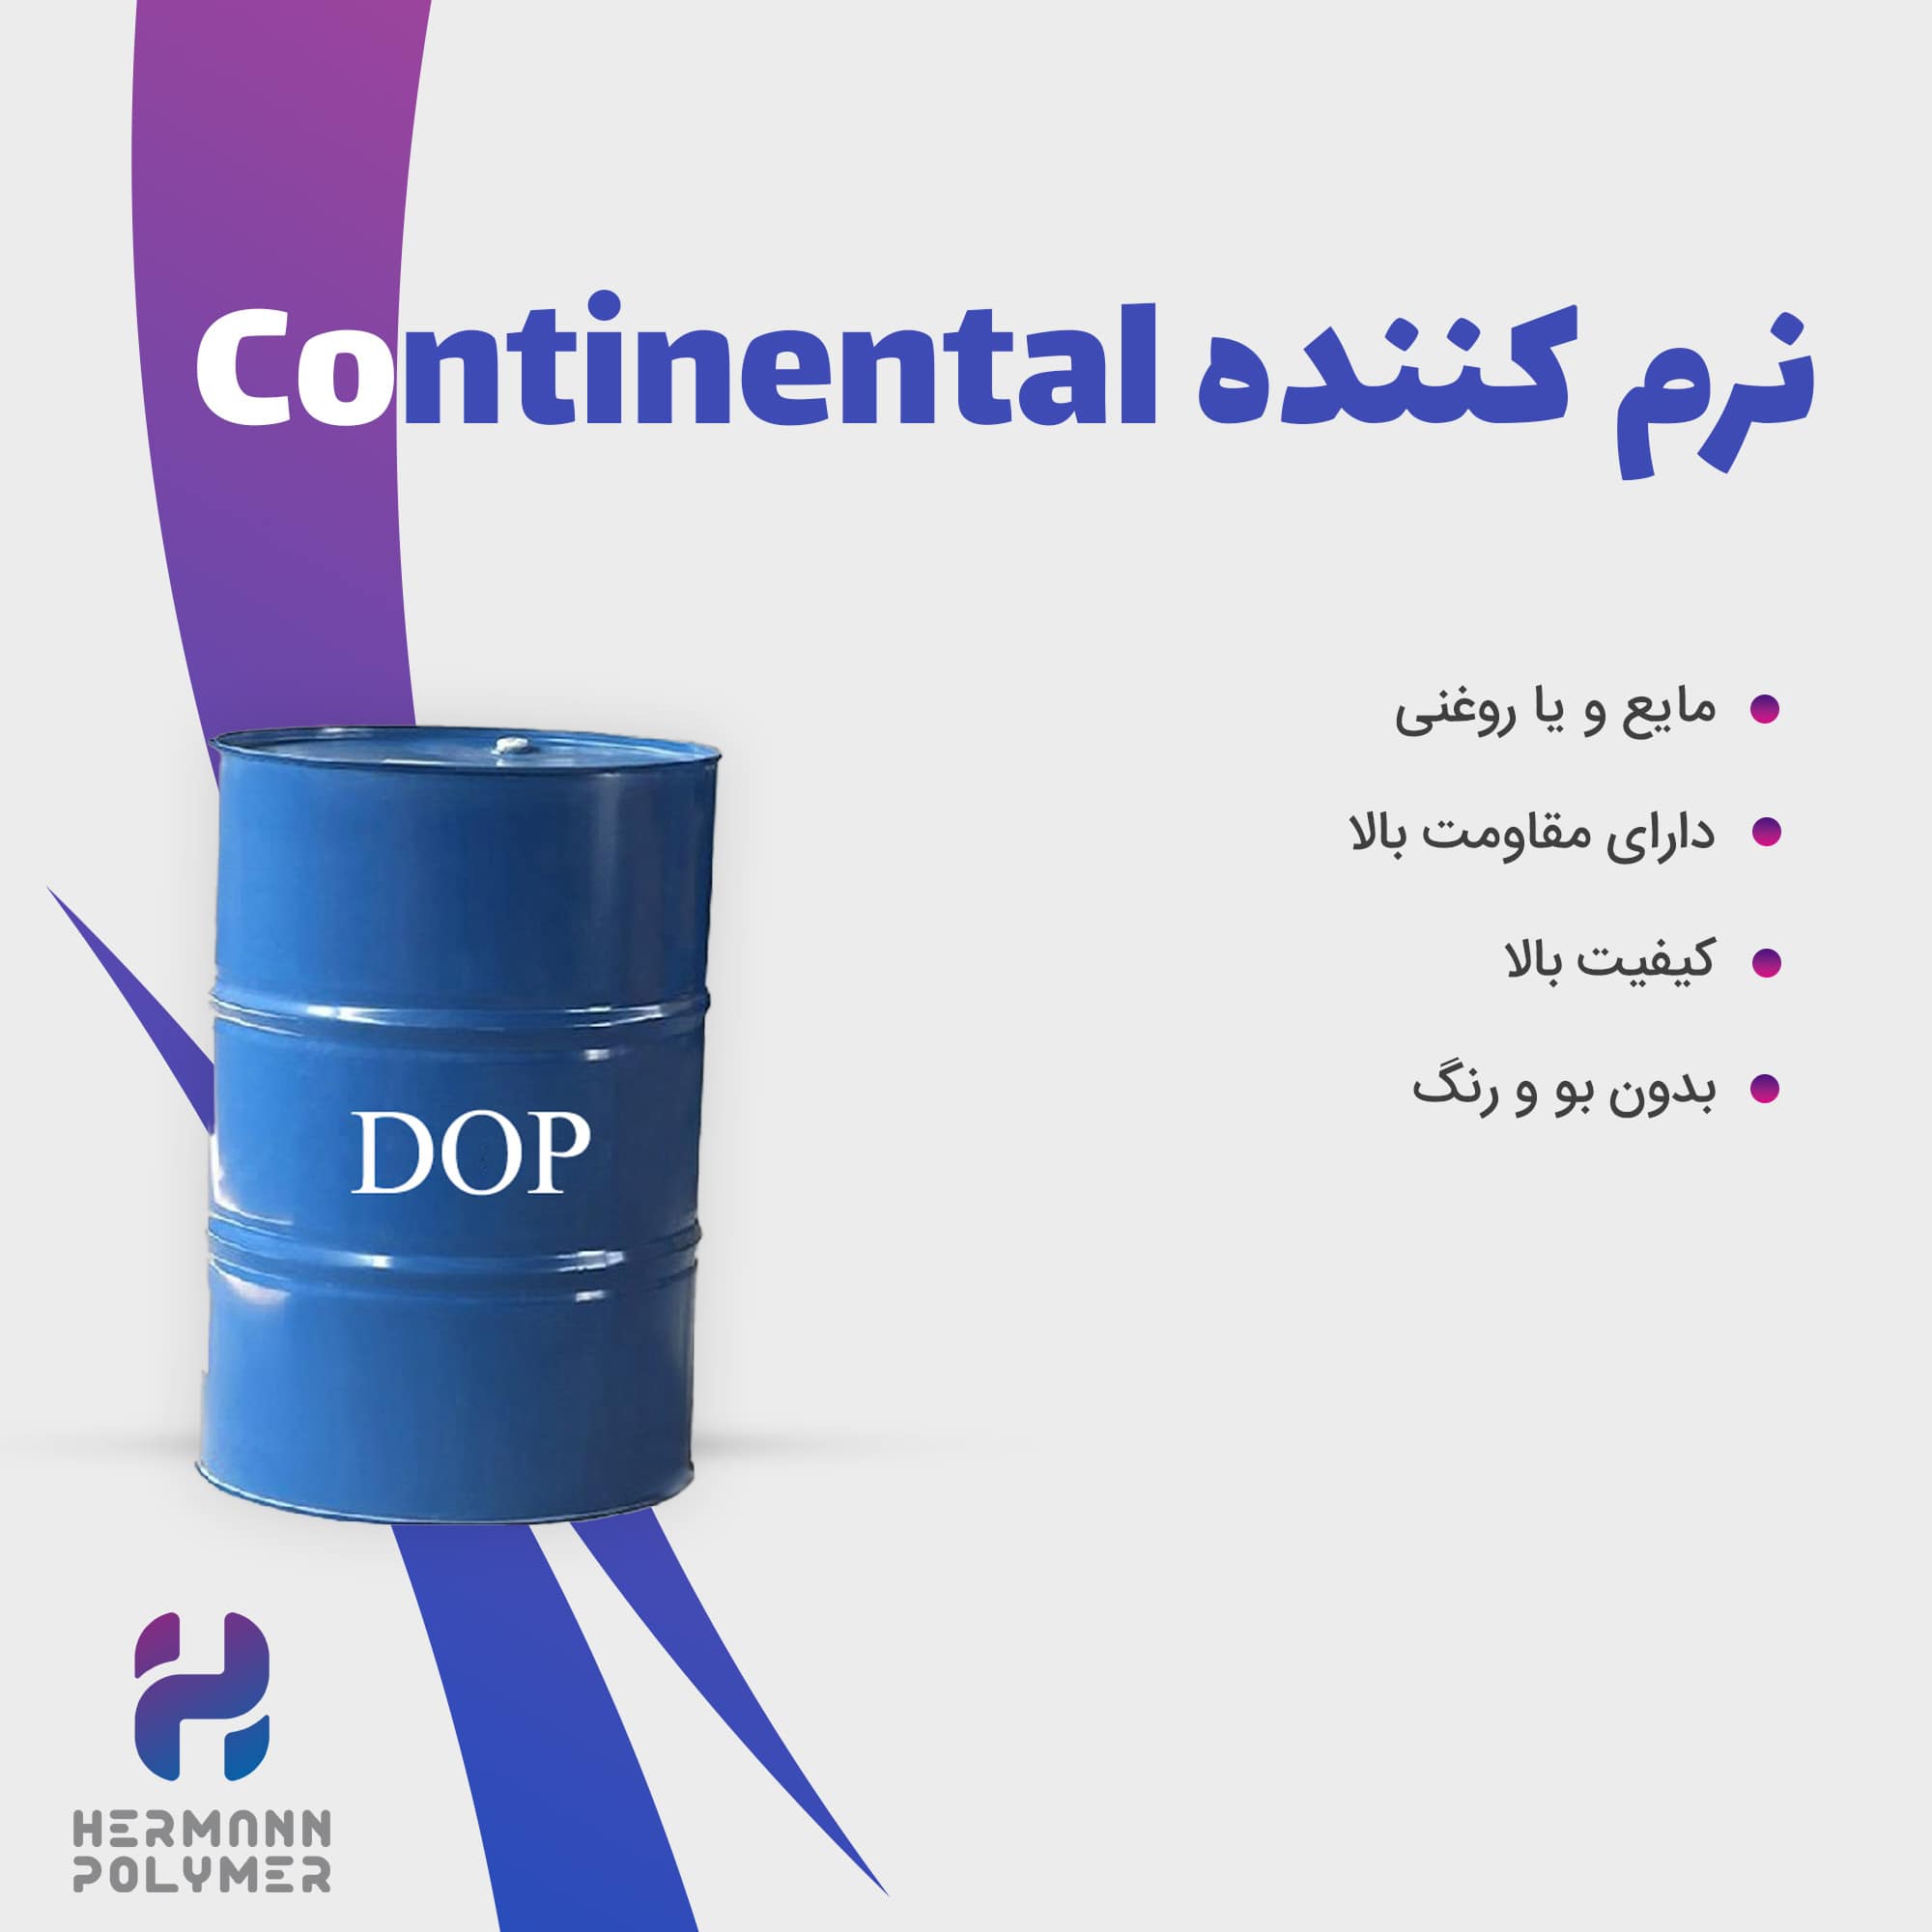 NarmKonnande - DOP Continental